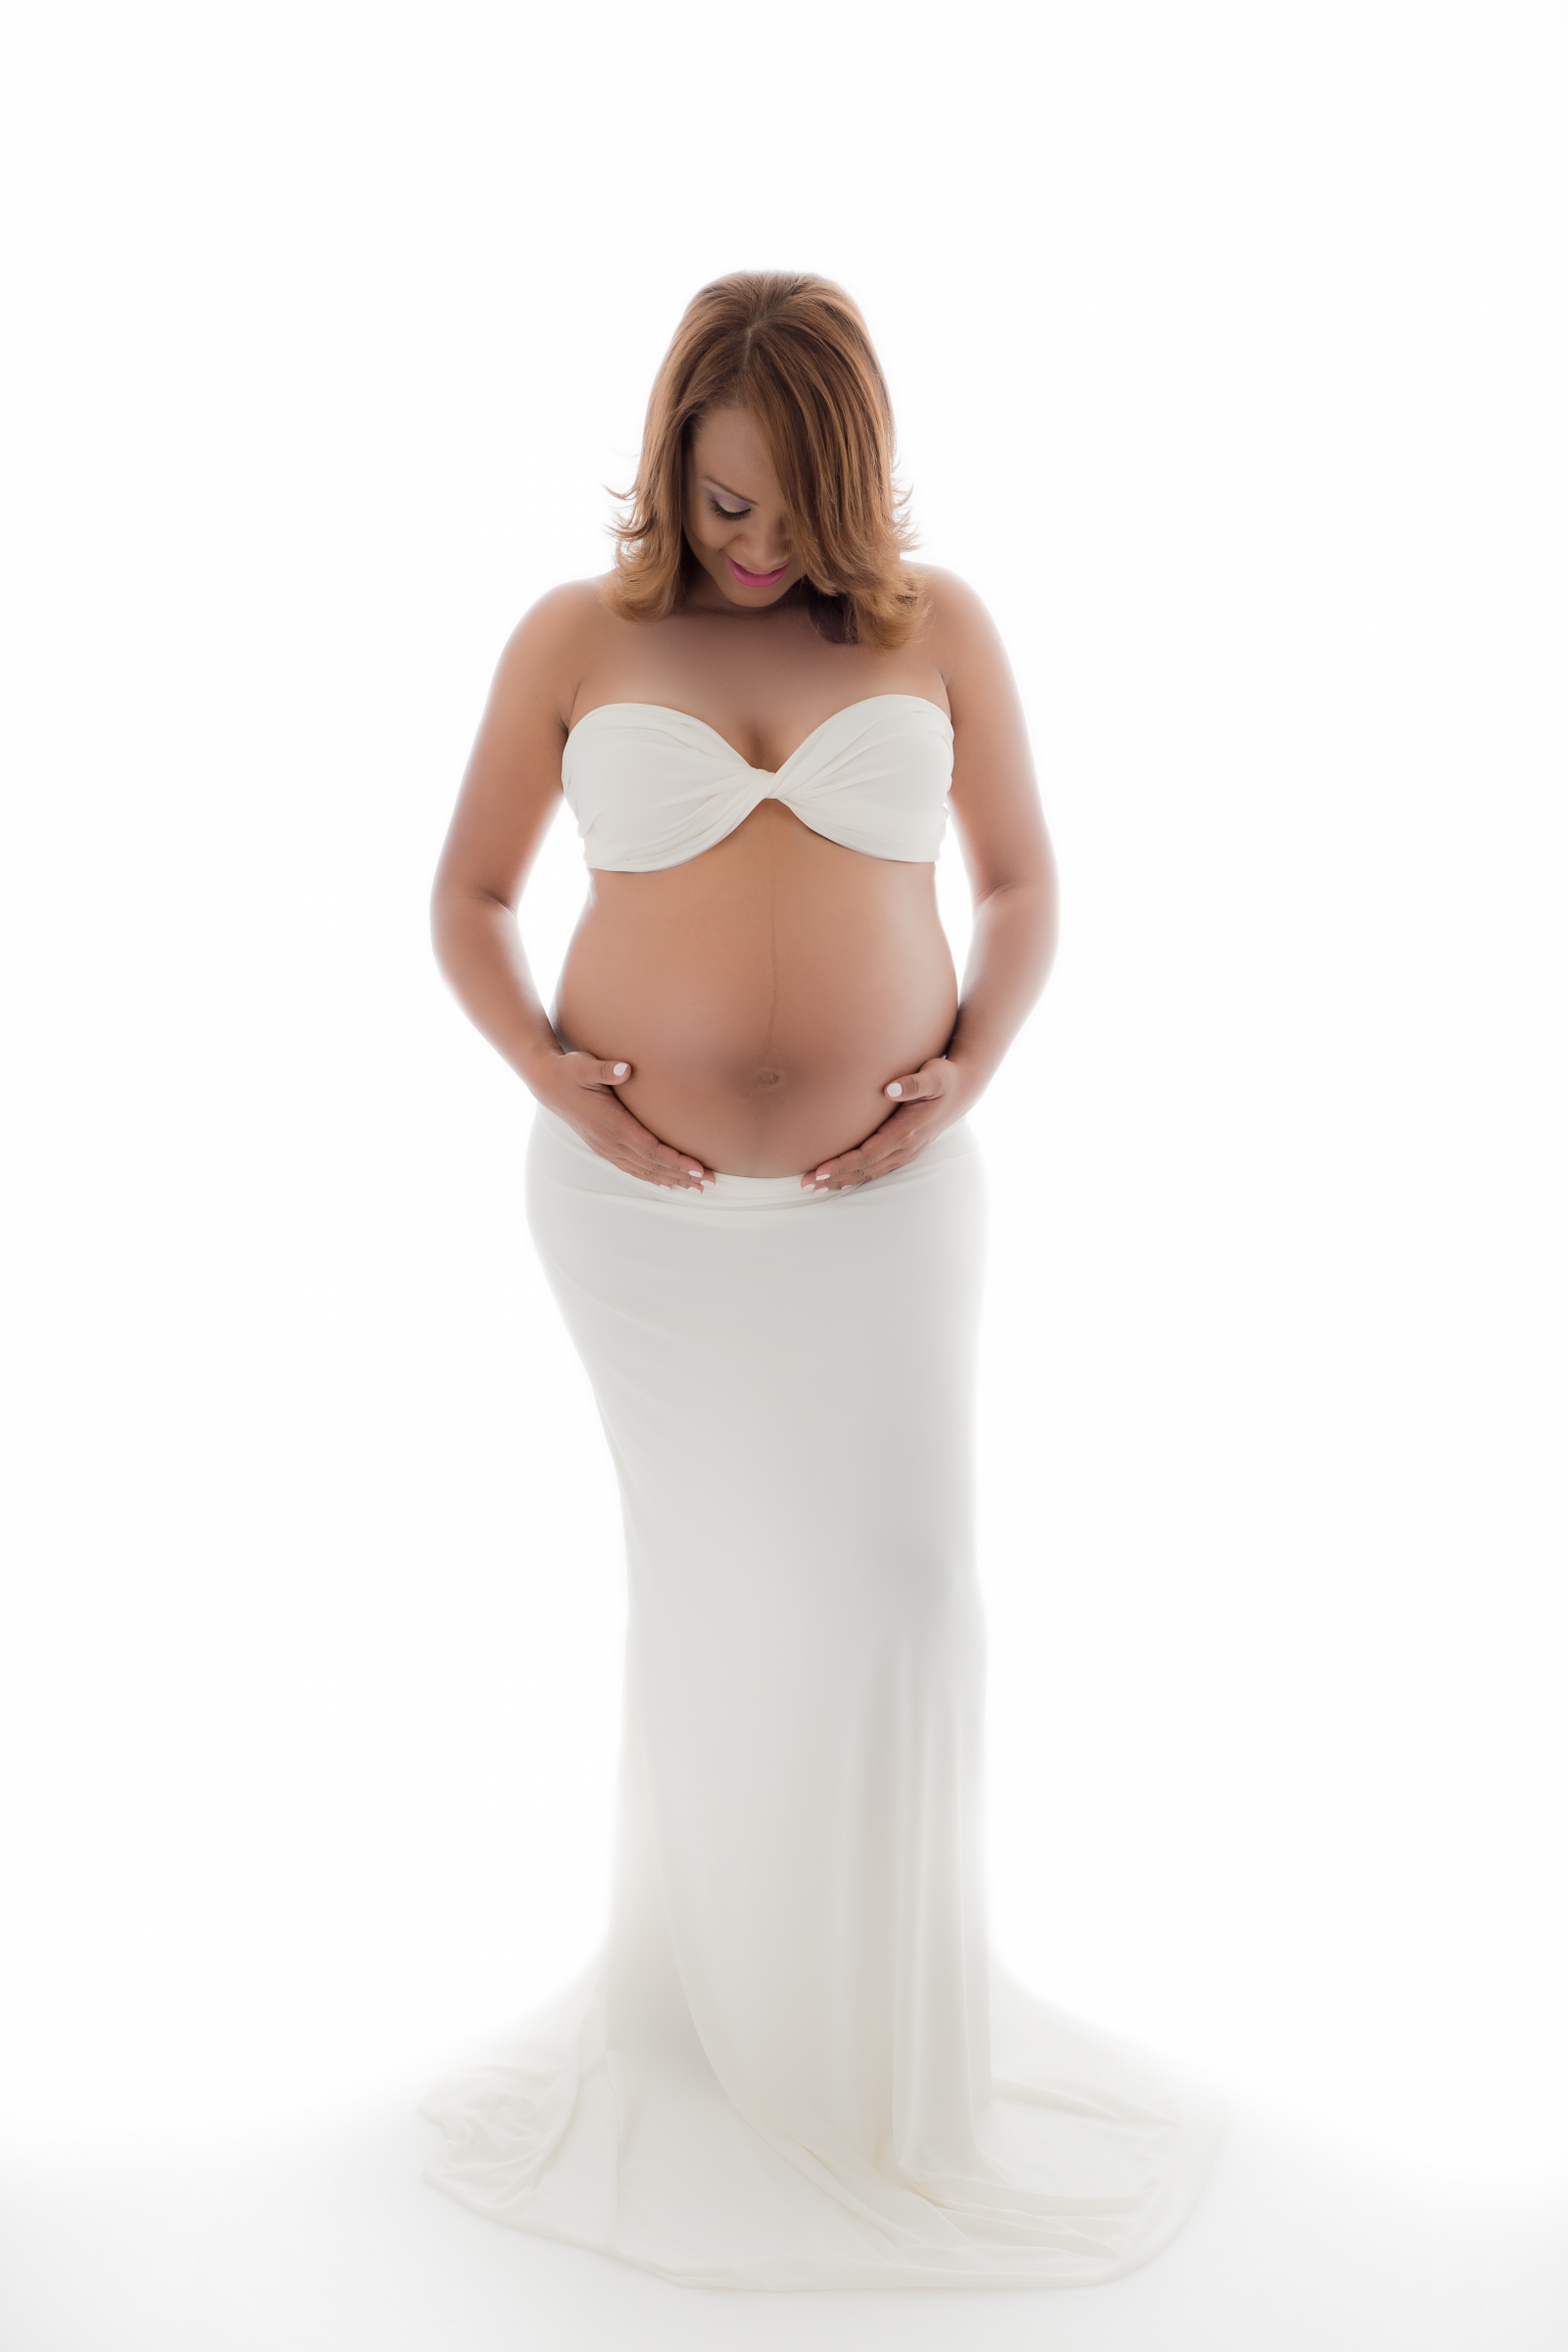 Burlington-Maternity-Photographer-Berries-and-Fairies-Photograph